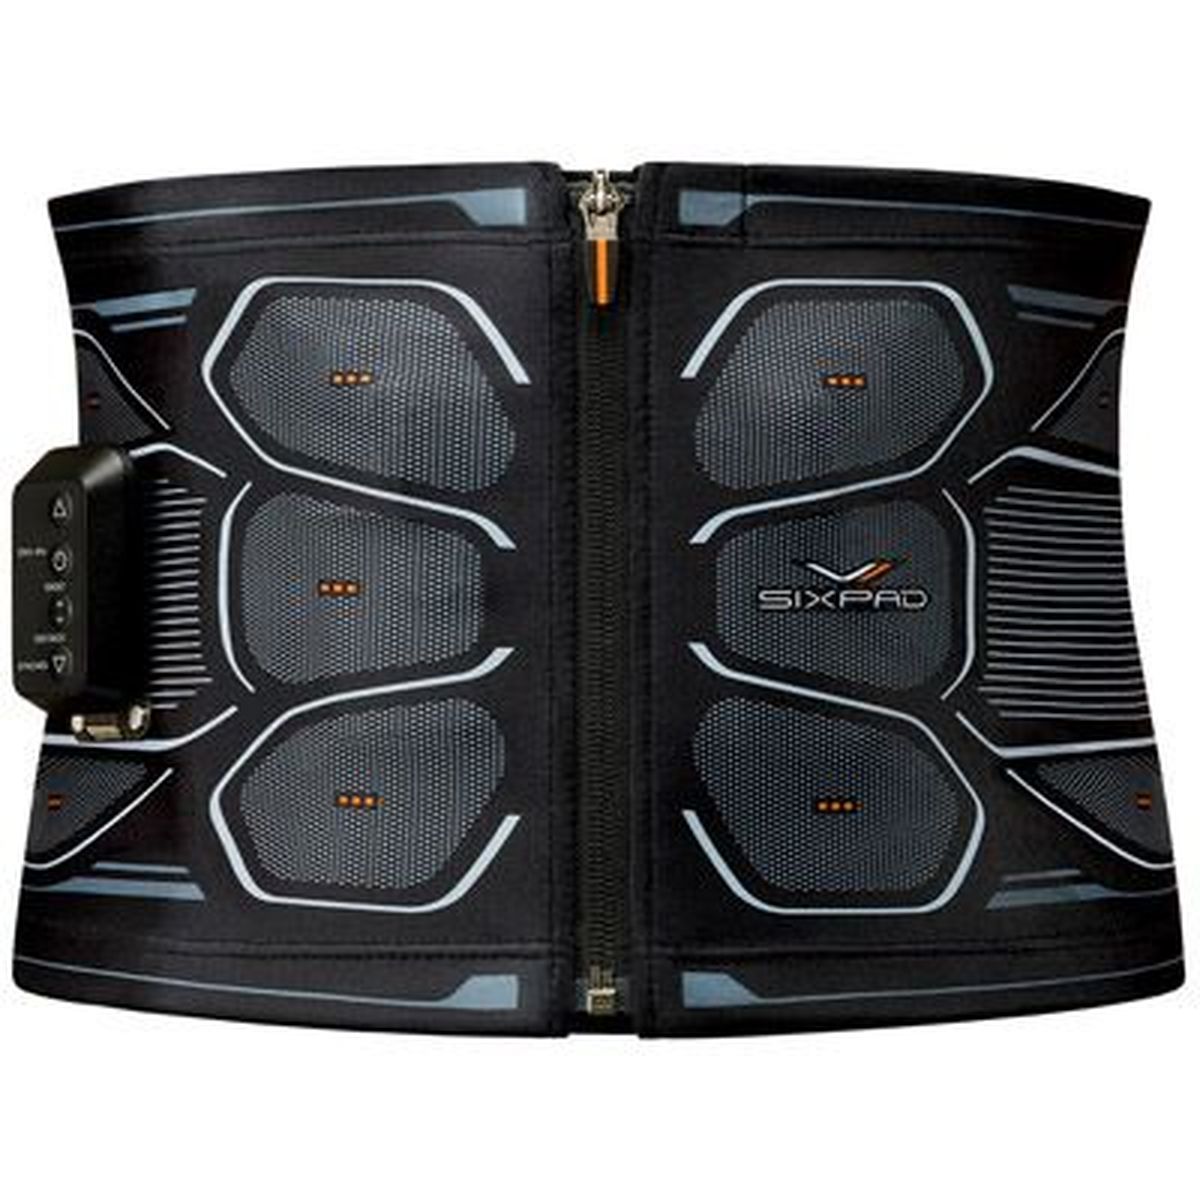 SIXPAD Powersuit Core Belt シックスパッド パワースーツ コアベルト Sサイズ